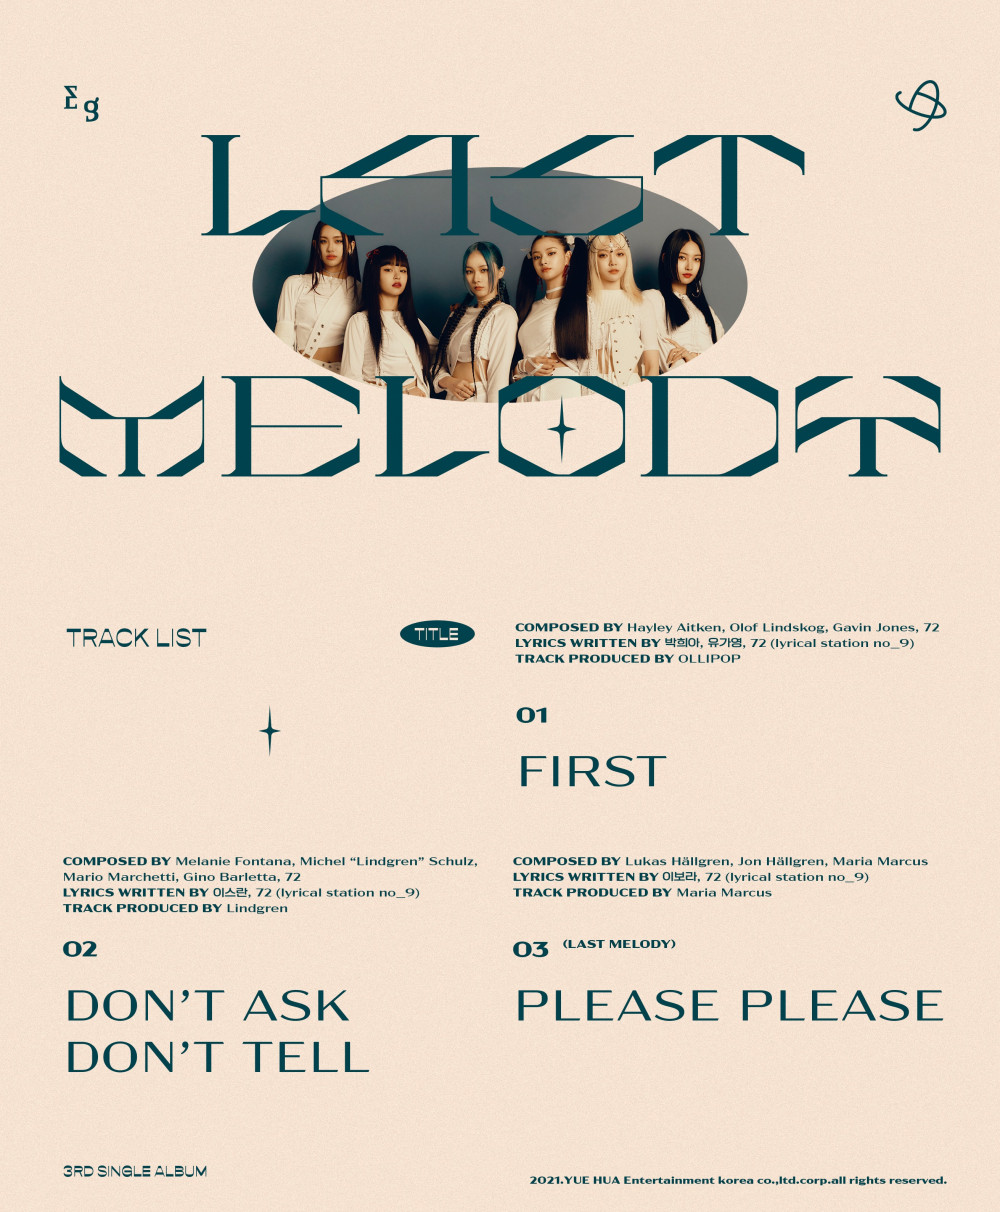 [Камбэк] EVERGLOW альбом "Last Melody": музыкальный клип "First"